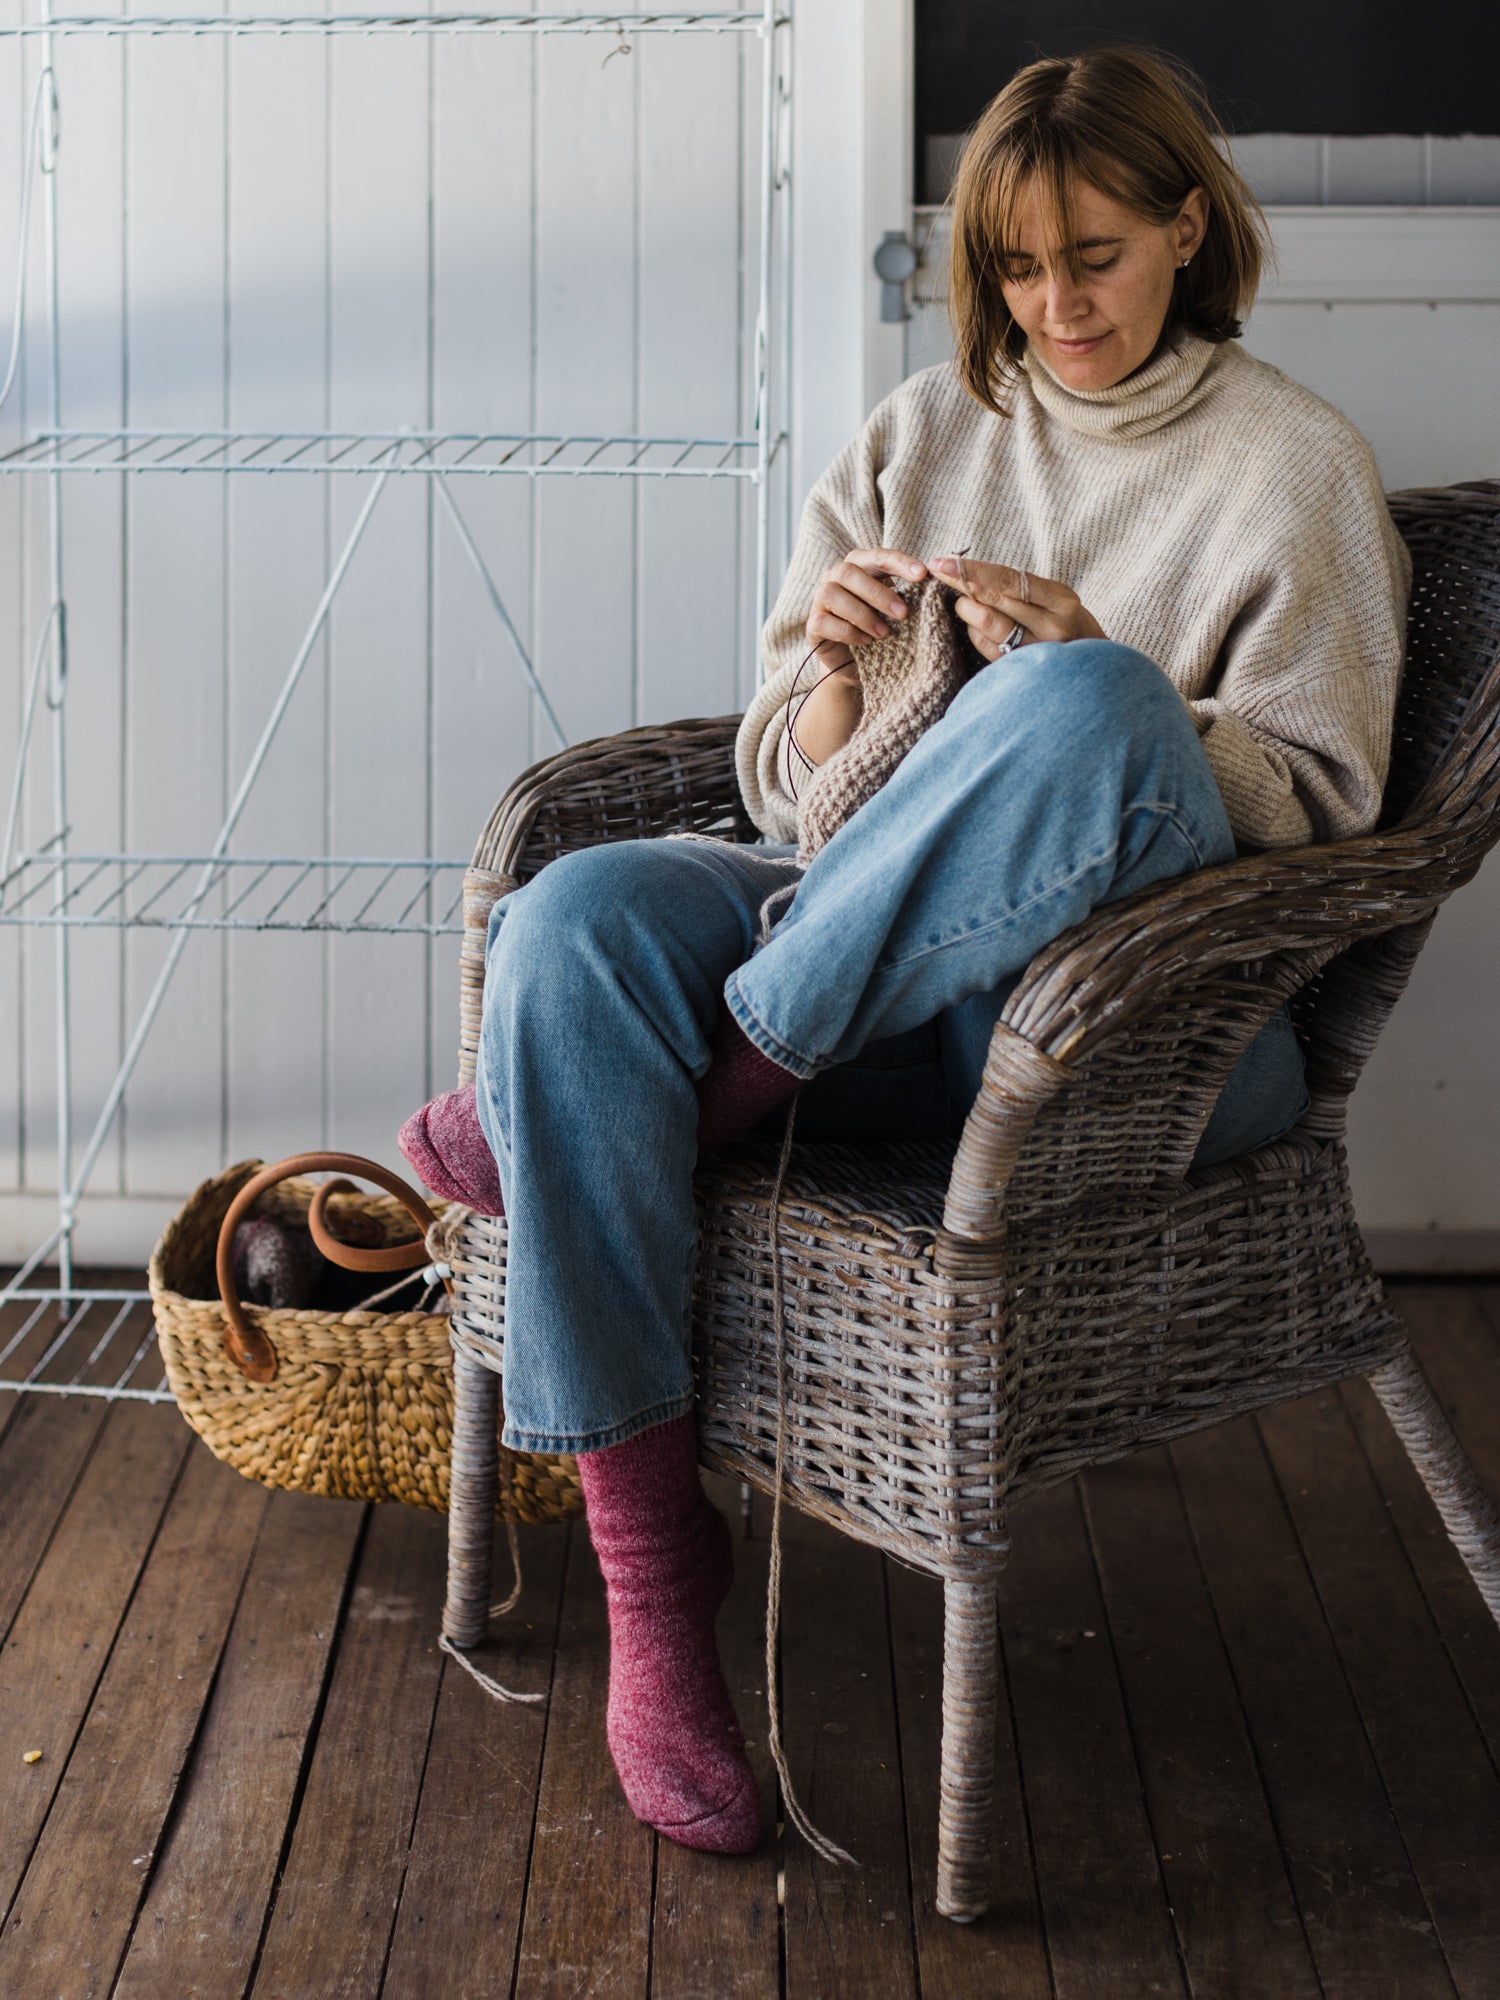 Samantha Gehrmann this darling home knitting handspun yarn